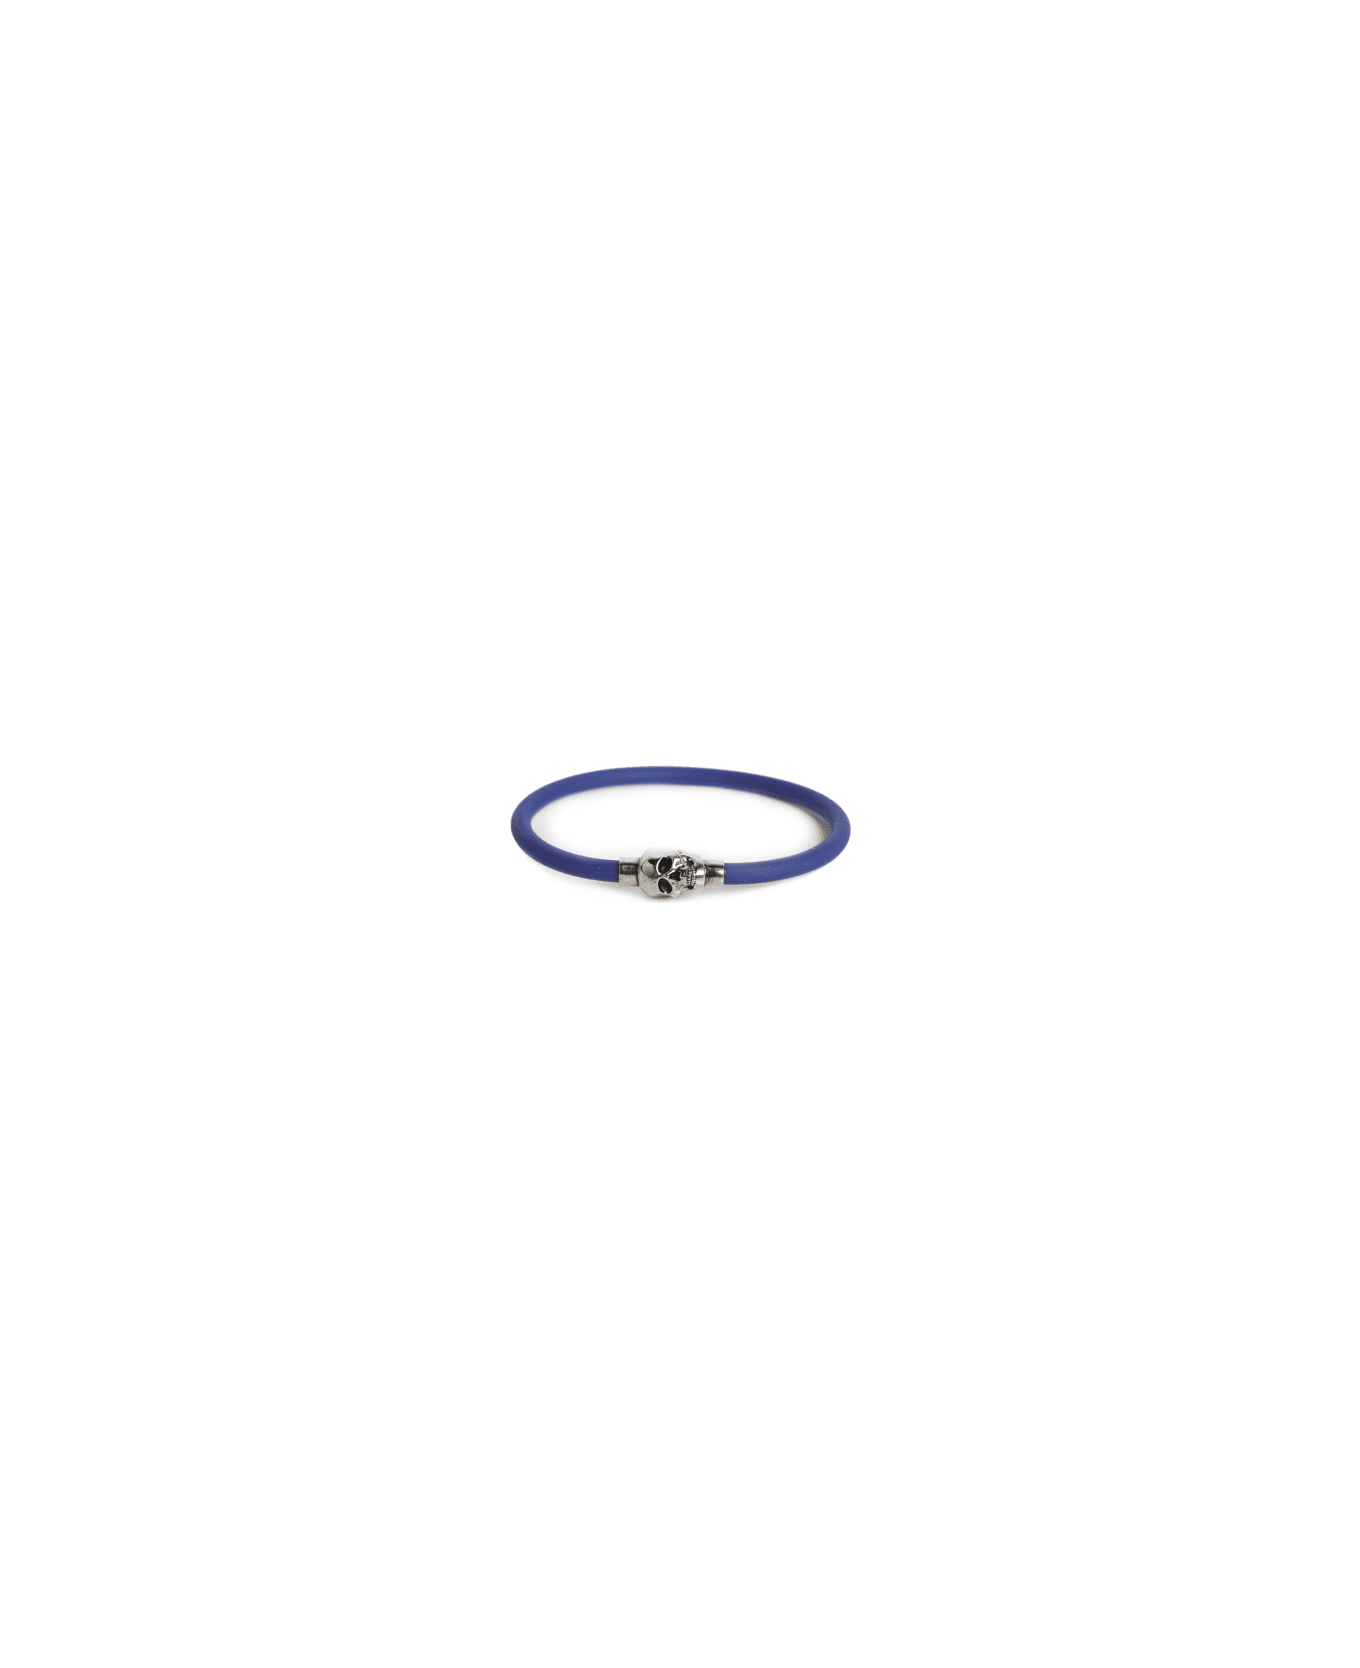 Alexander McQueen Rubber Skull Bracelet - Electric blue/a.sil